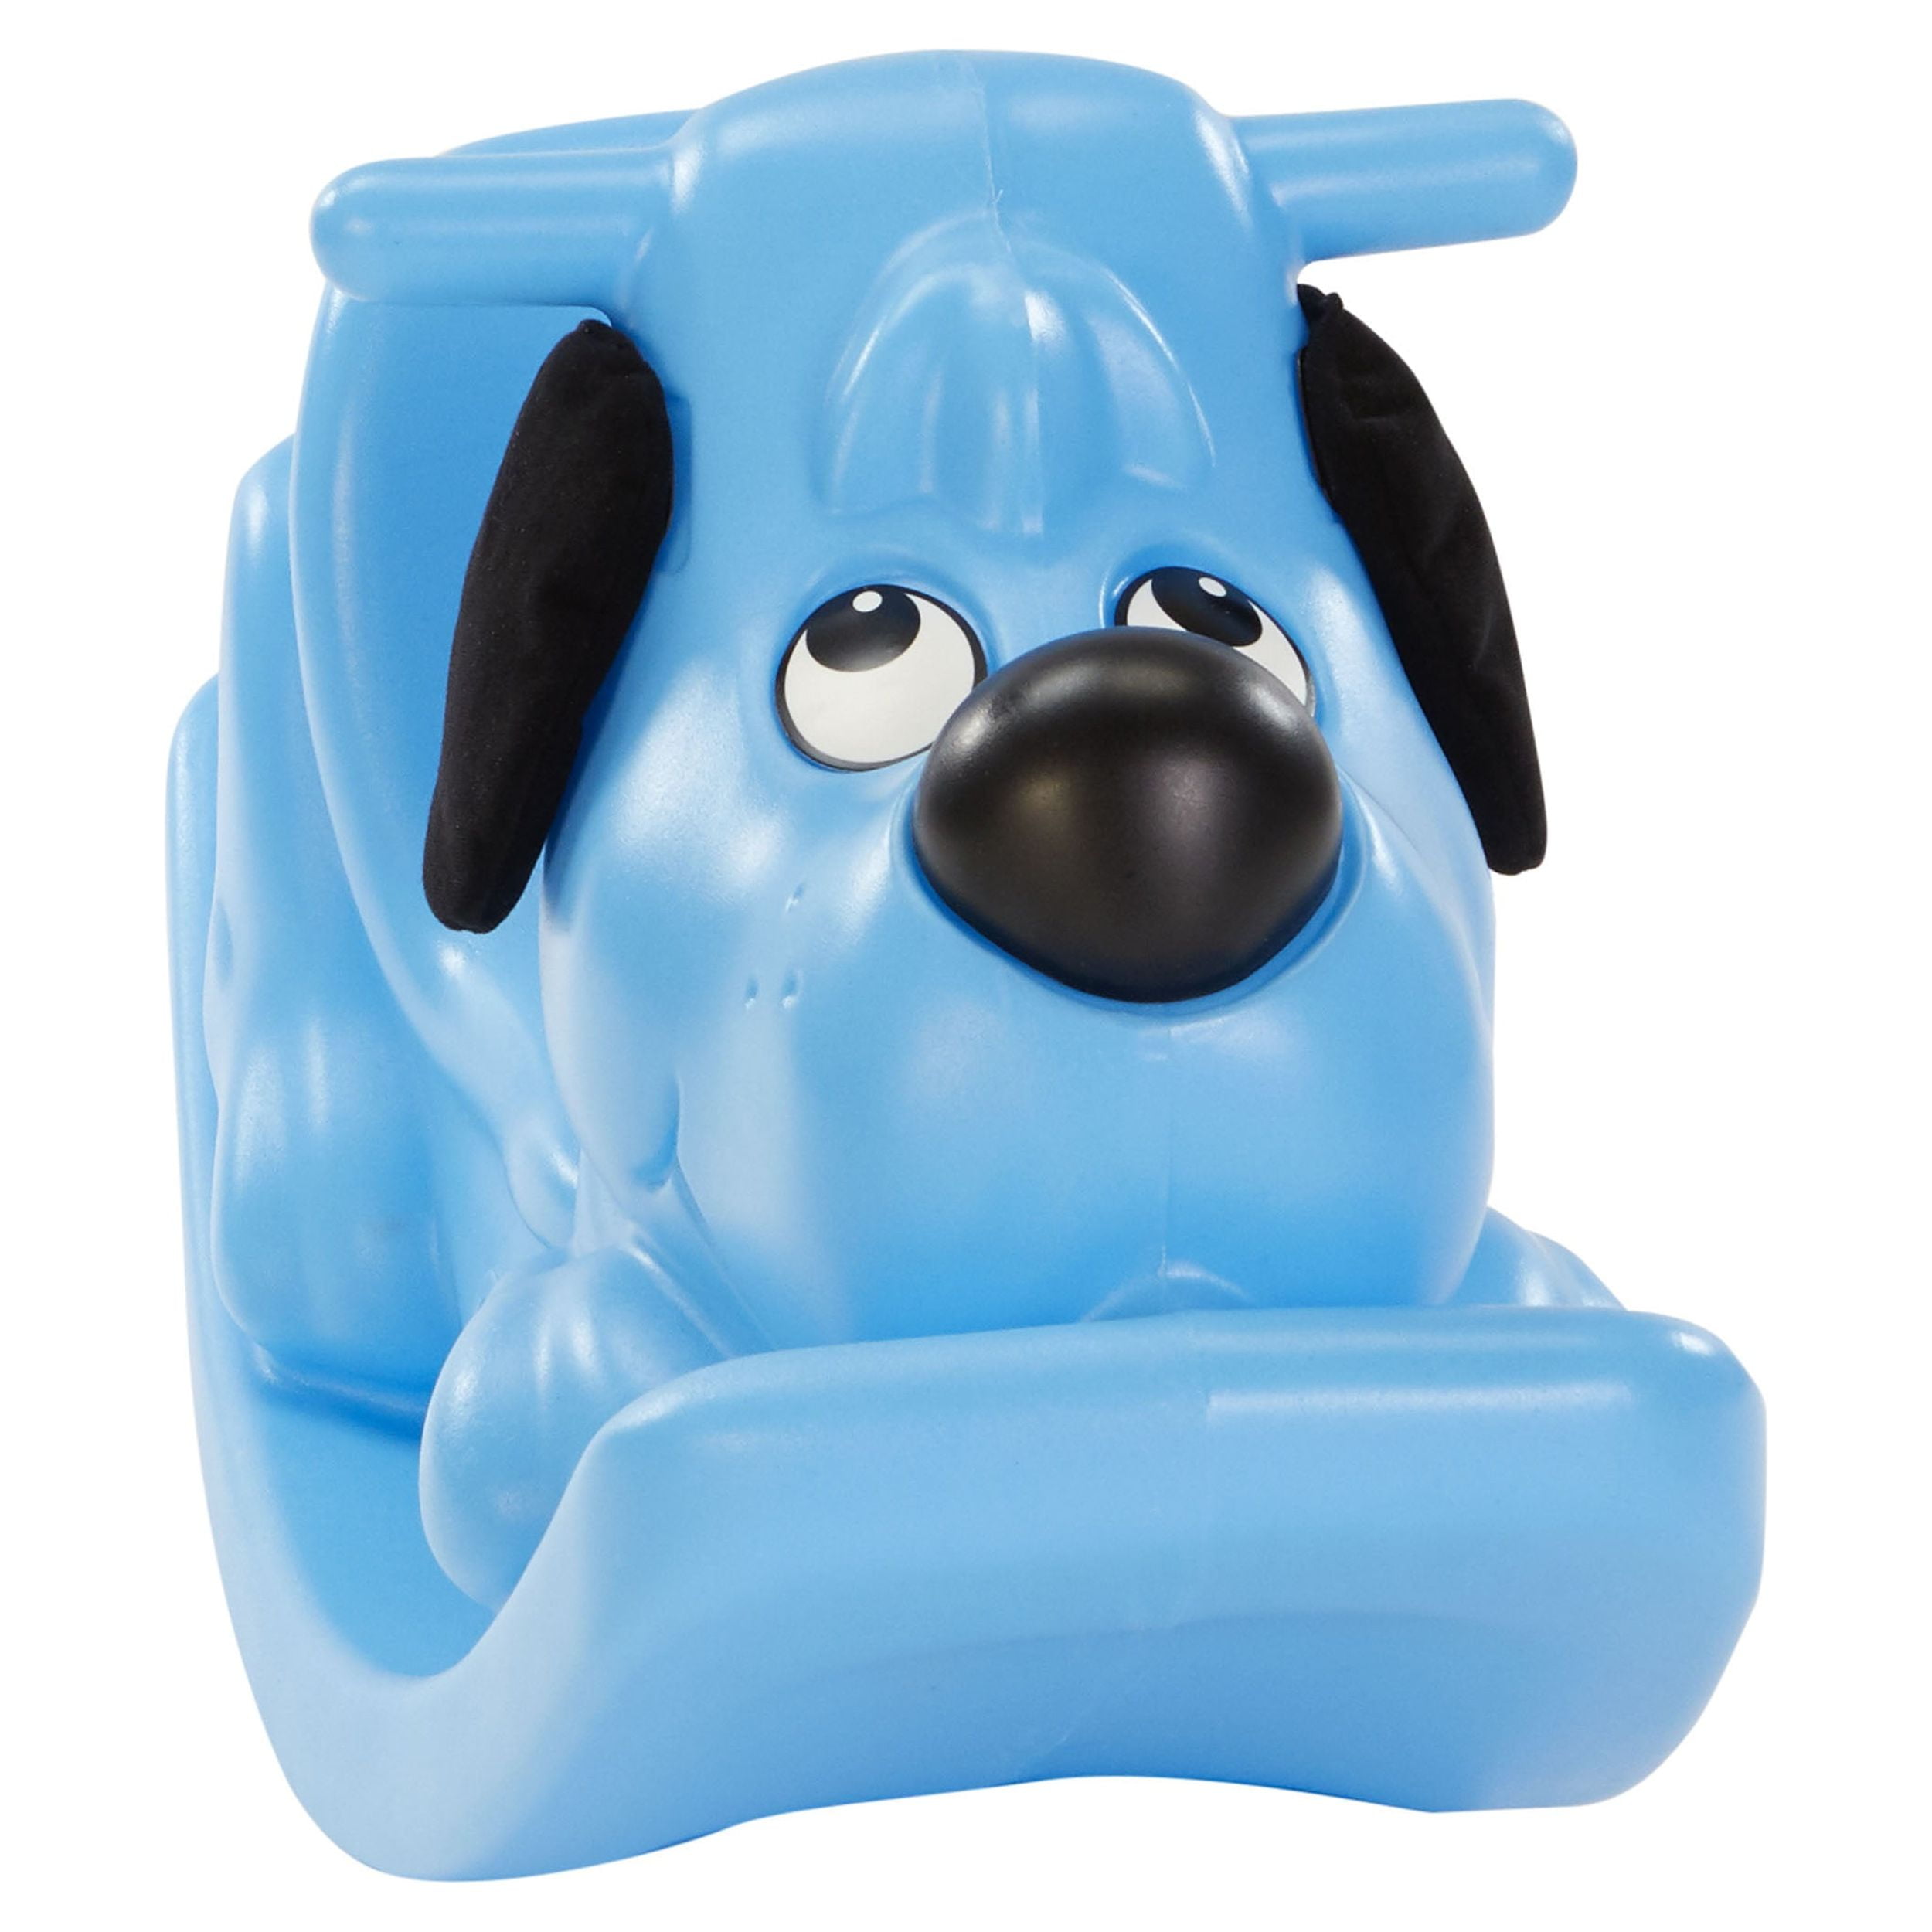 Little Tikes Rockin' Puppy in Blue, Classic Indoor Outdoor Toddler